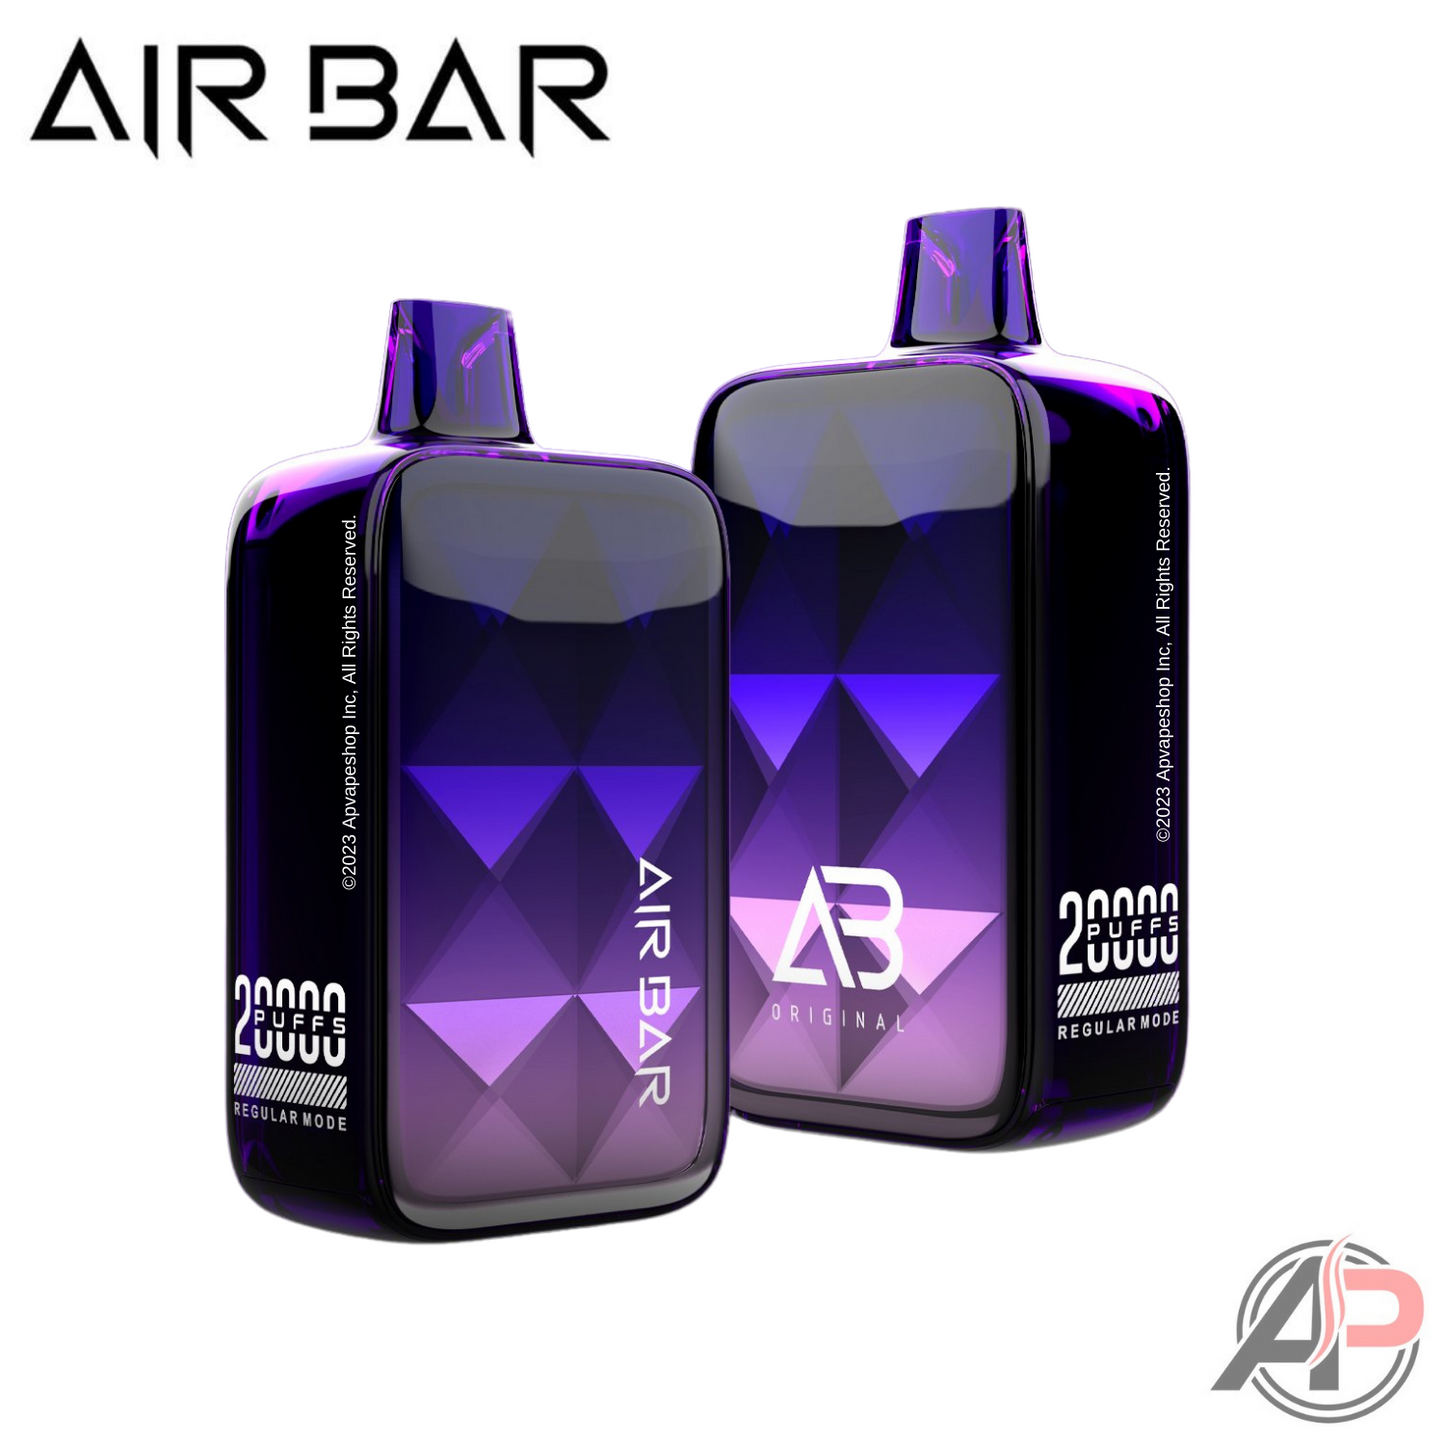 Air Bar Diamond Box 20000 Puff Disposable Vape Device